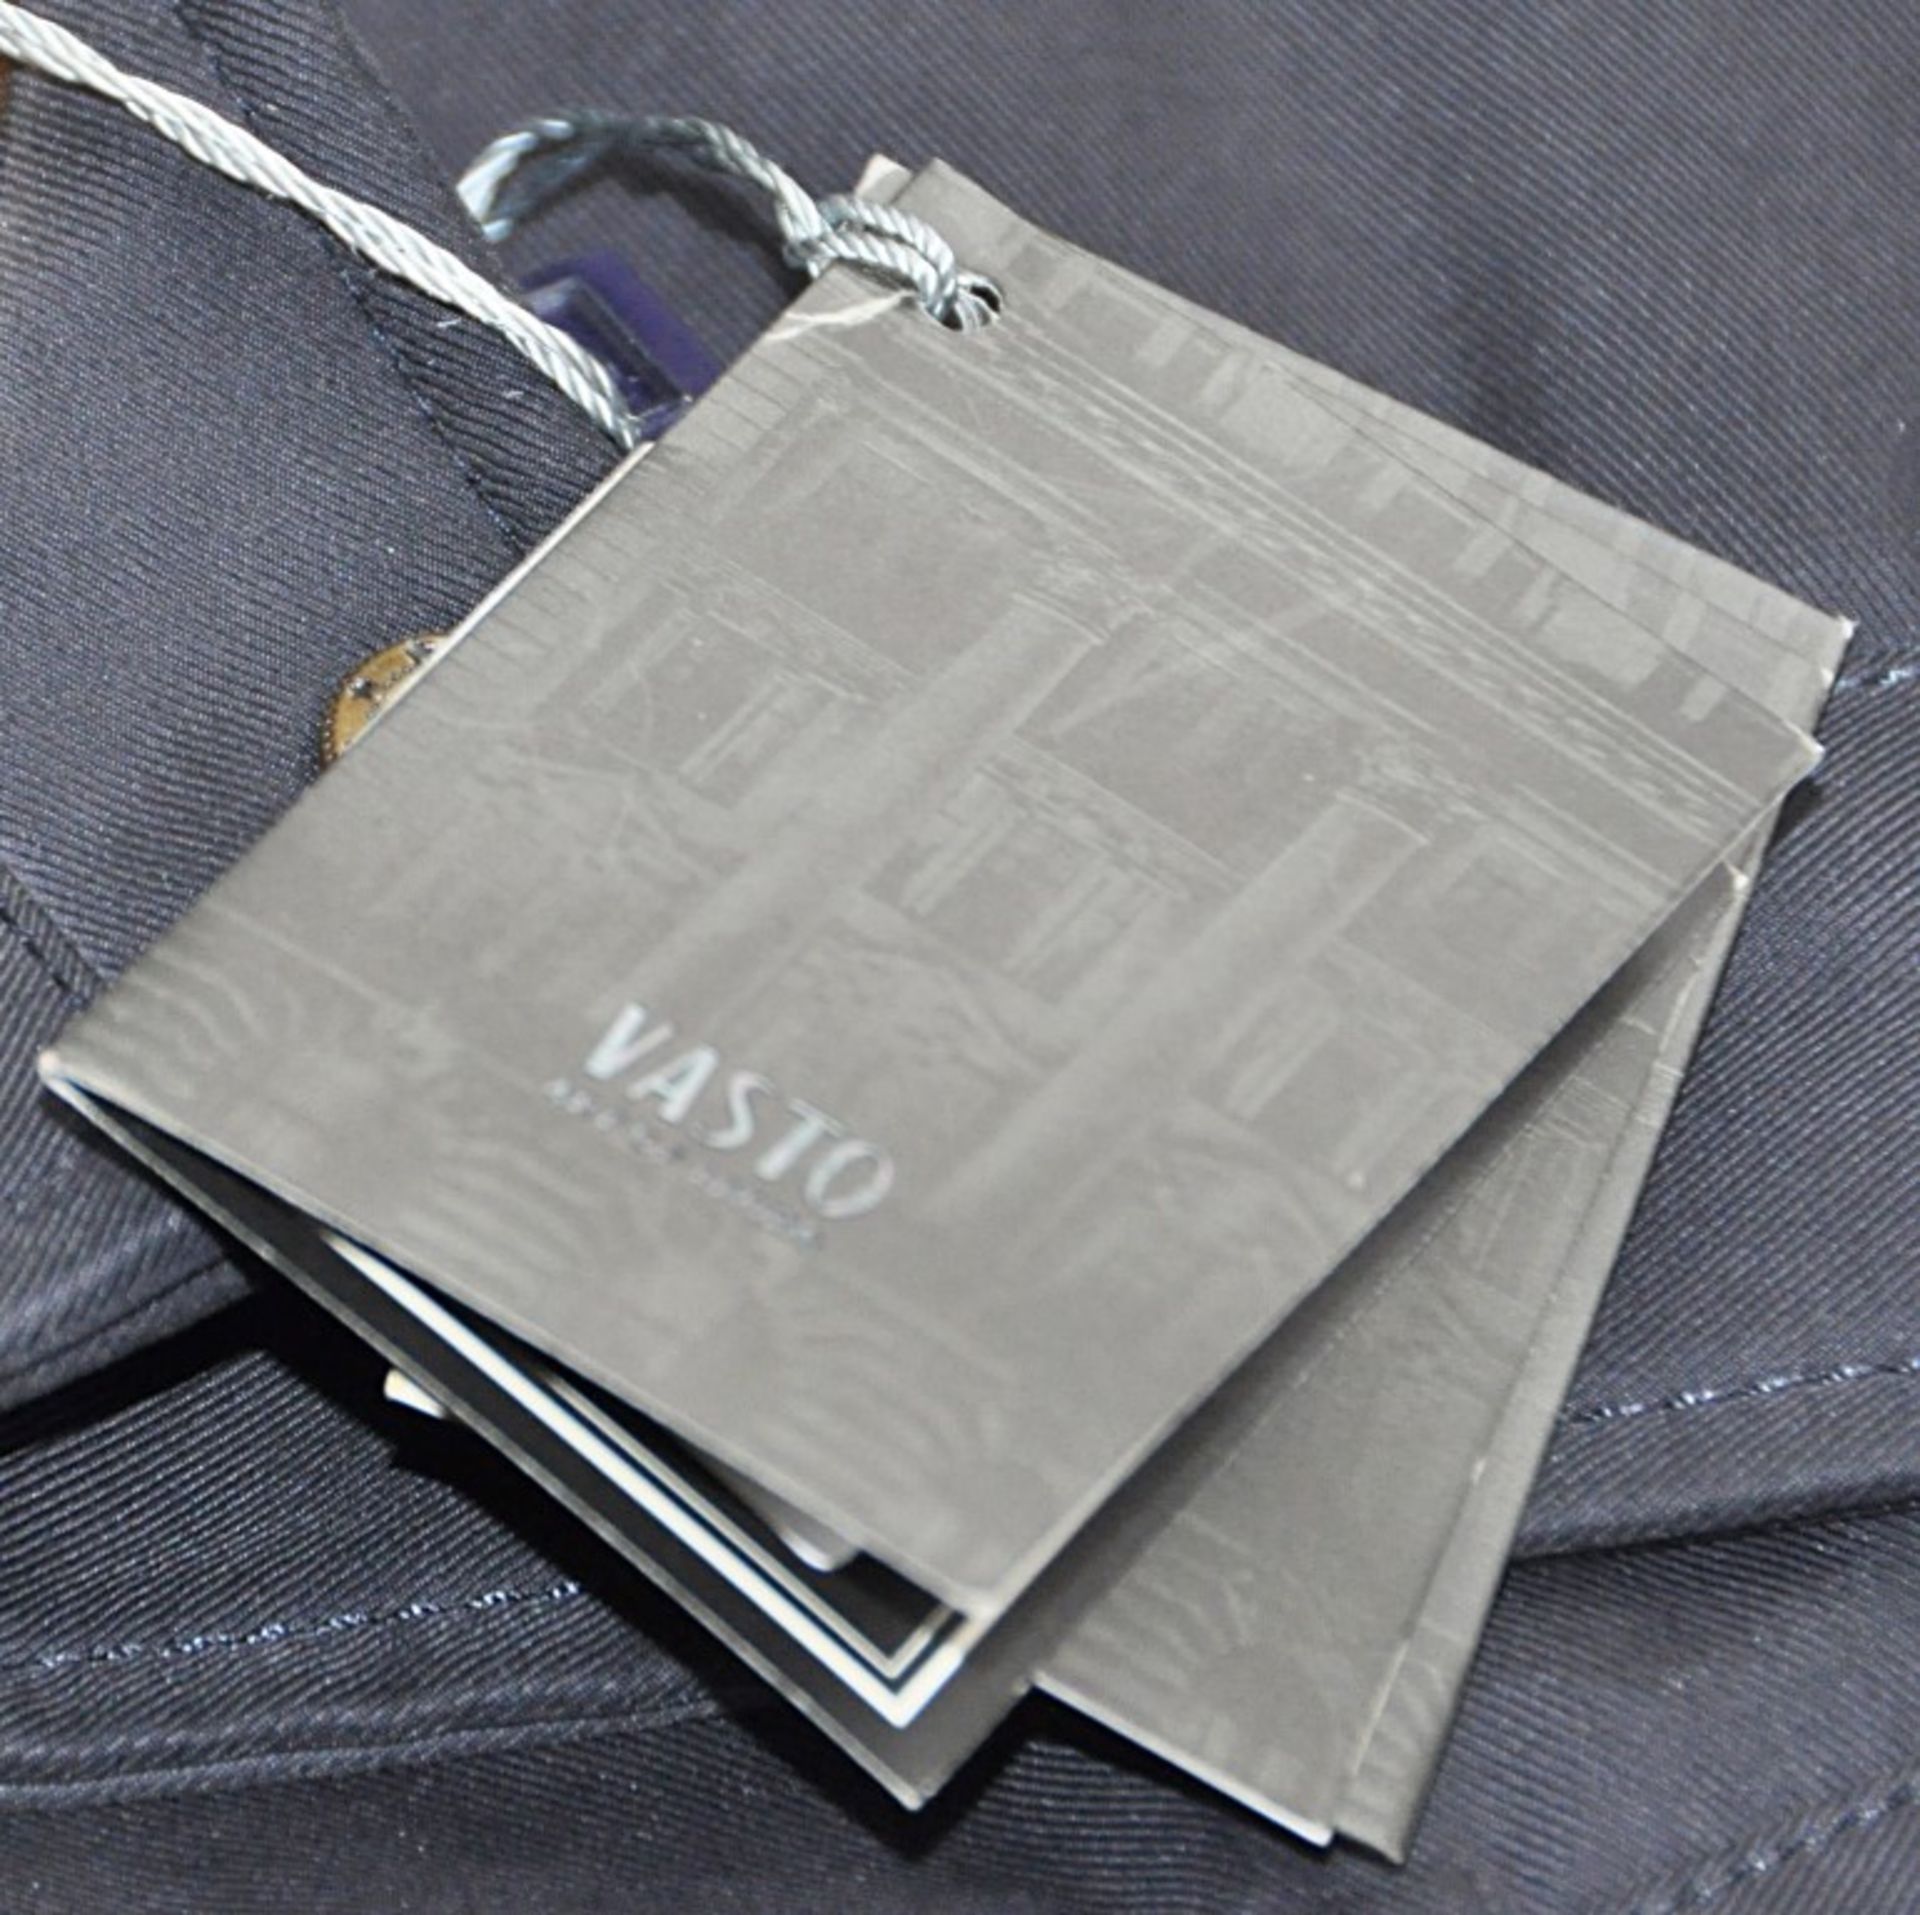 1 x Men's Long Sleeve Casual Jacket By International Luxury Brand "Vasto" (BAJ72241) – Size: Large – - Image 6 of 6